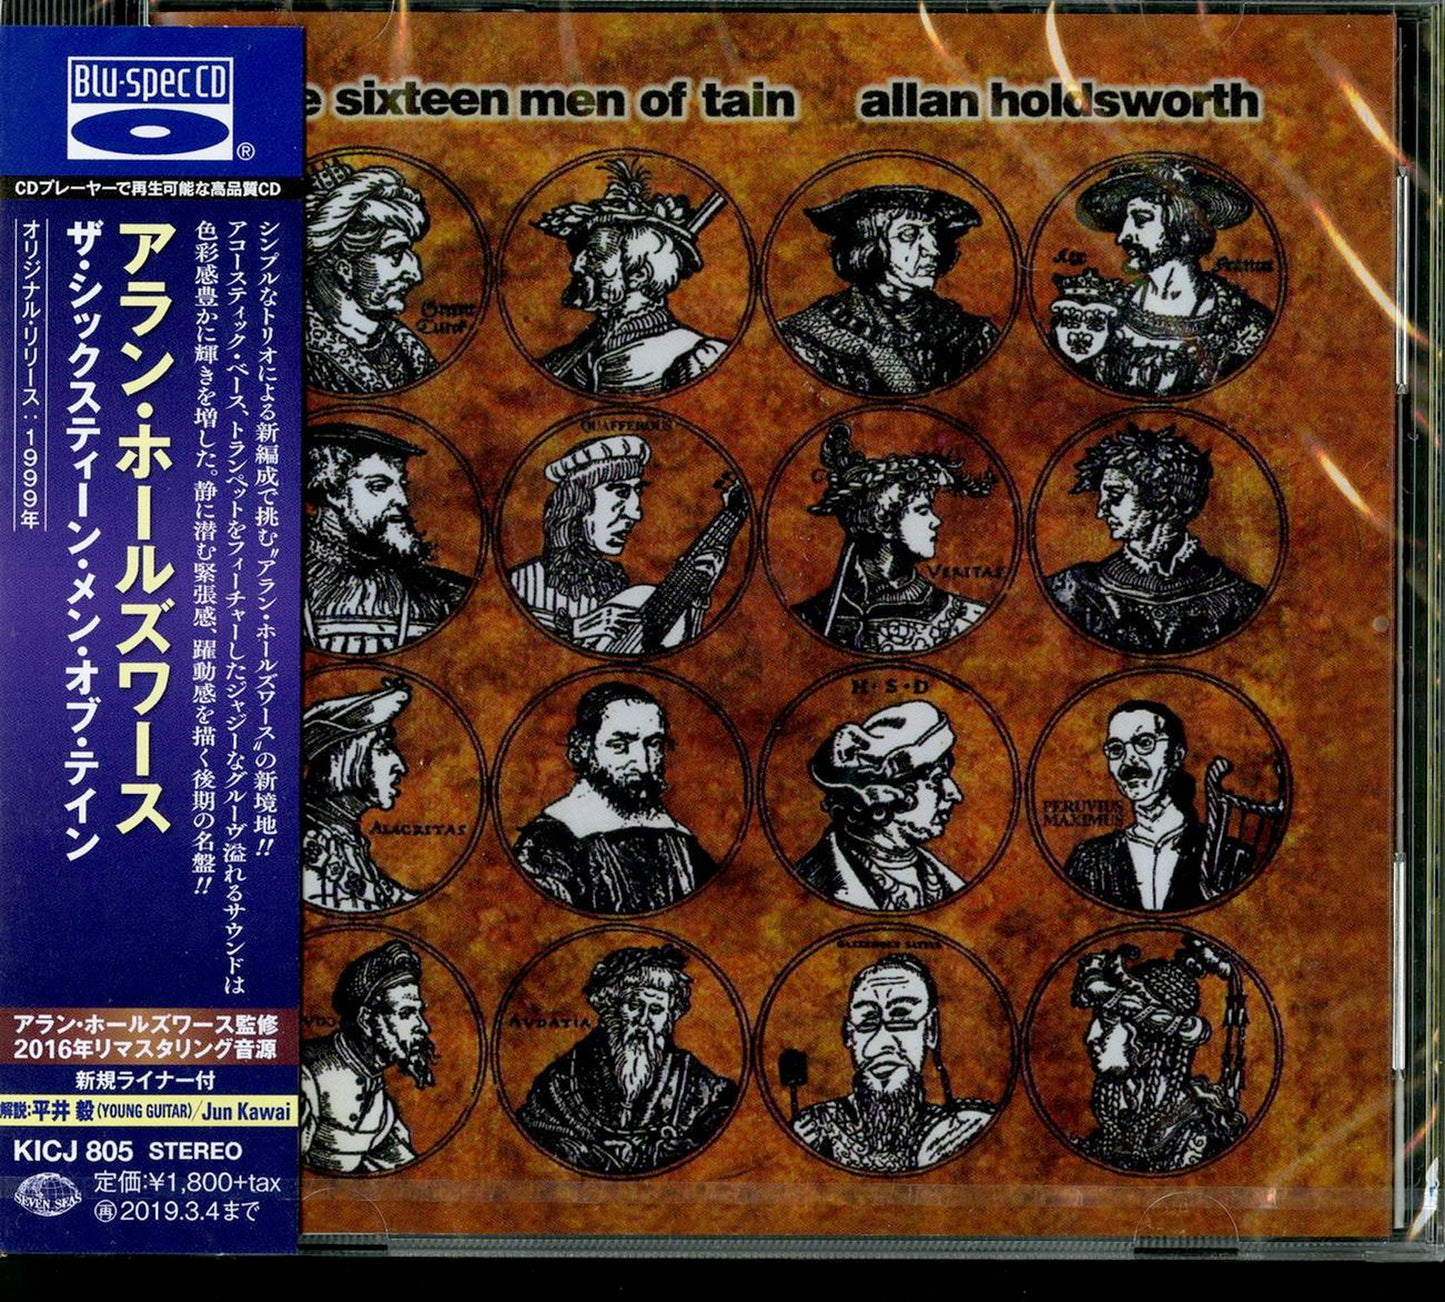 Allan Holdsworth - The Sixteen Men Of Tain - Blu-spec CD